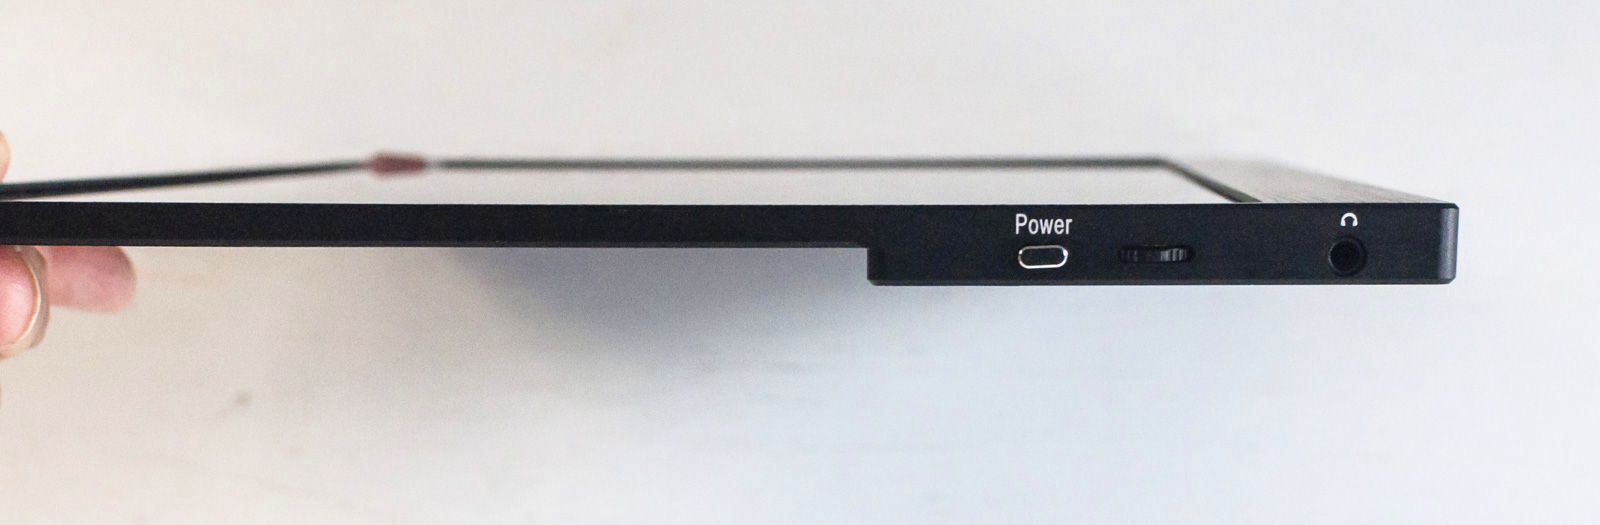 Recensione Desklab Portable Monitor, display portatile USB-C full optional